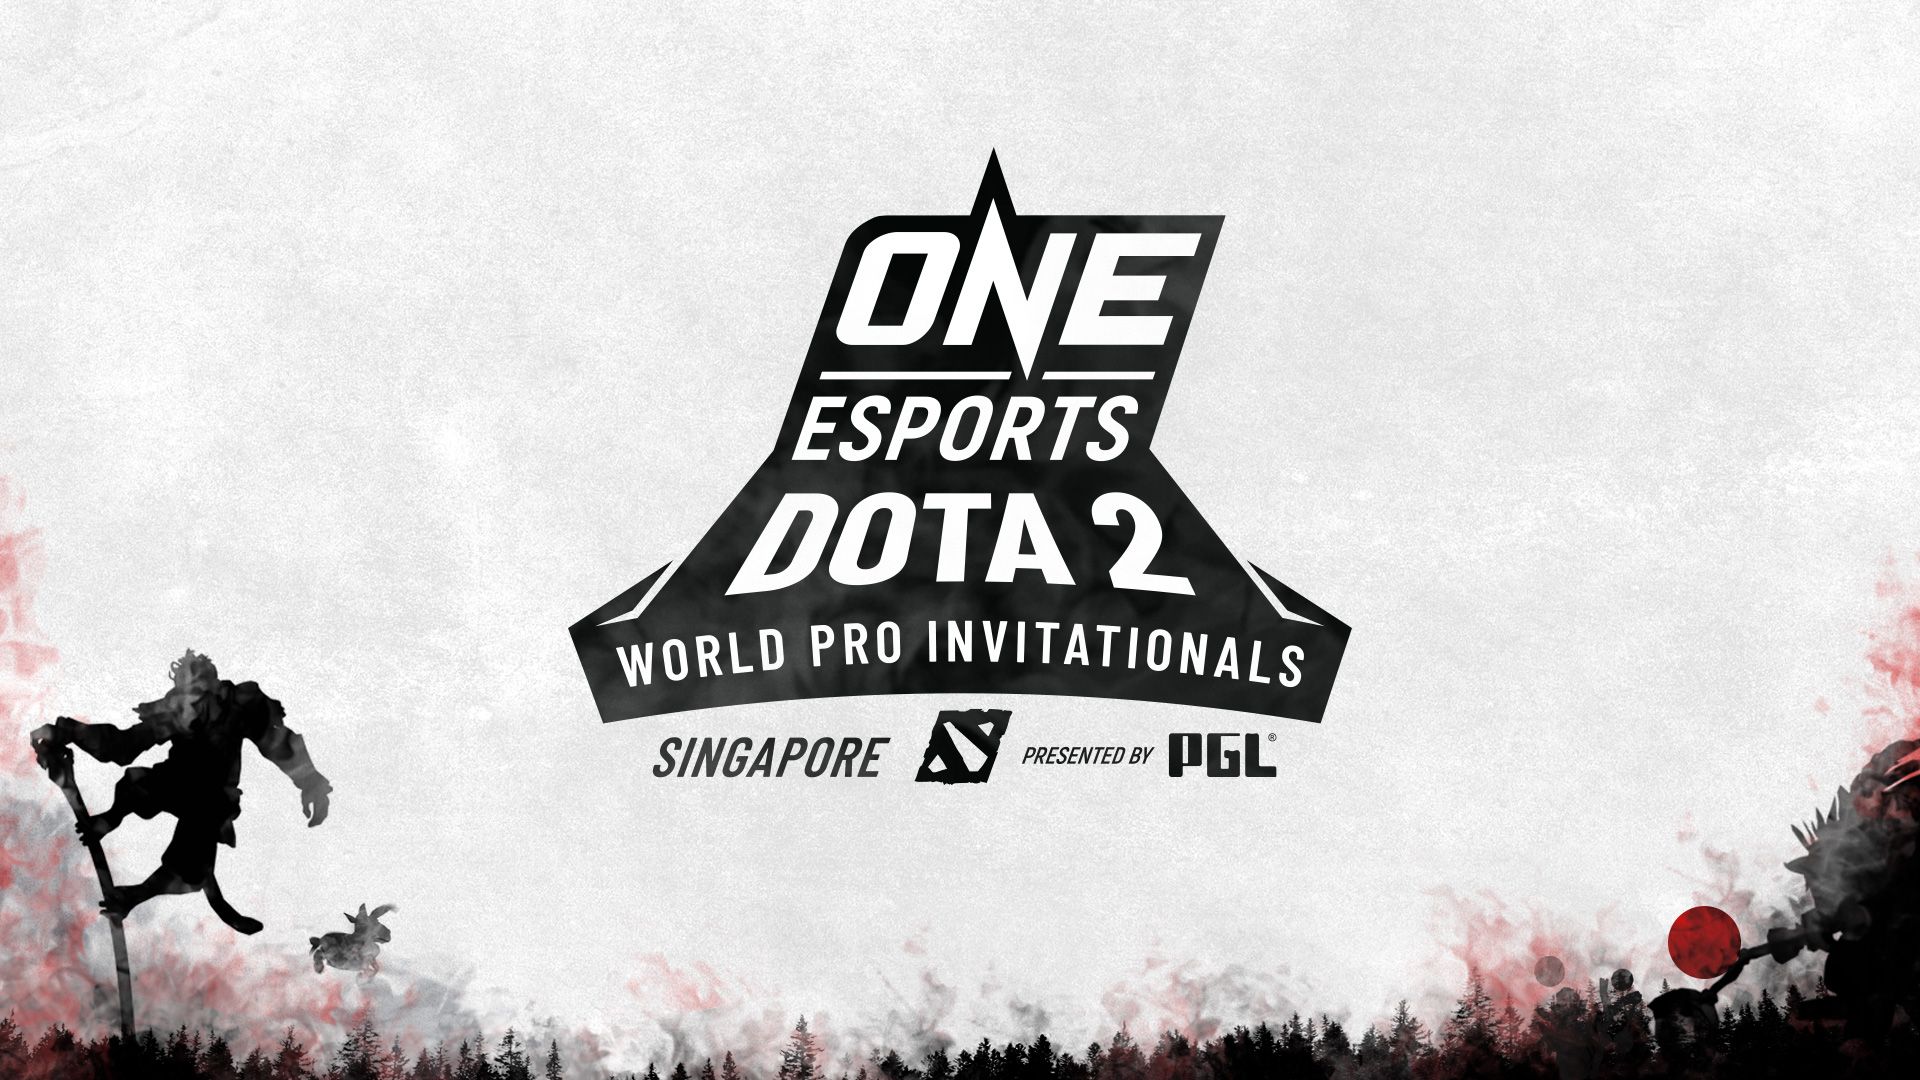 The ONE Esports Dota 2 World Pro Invitational